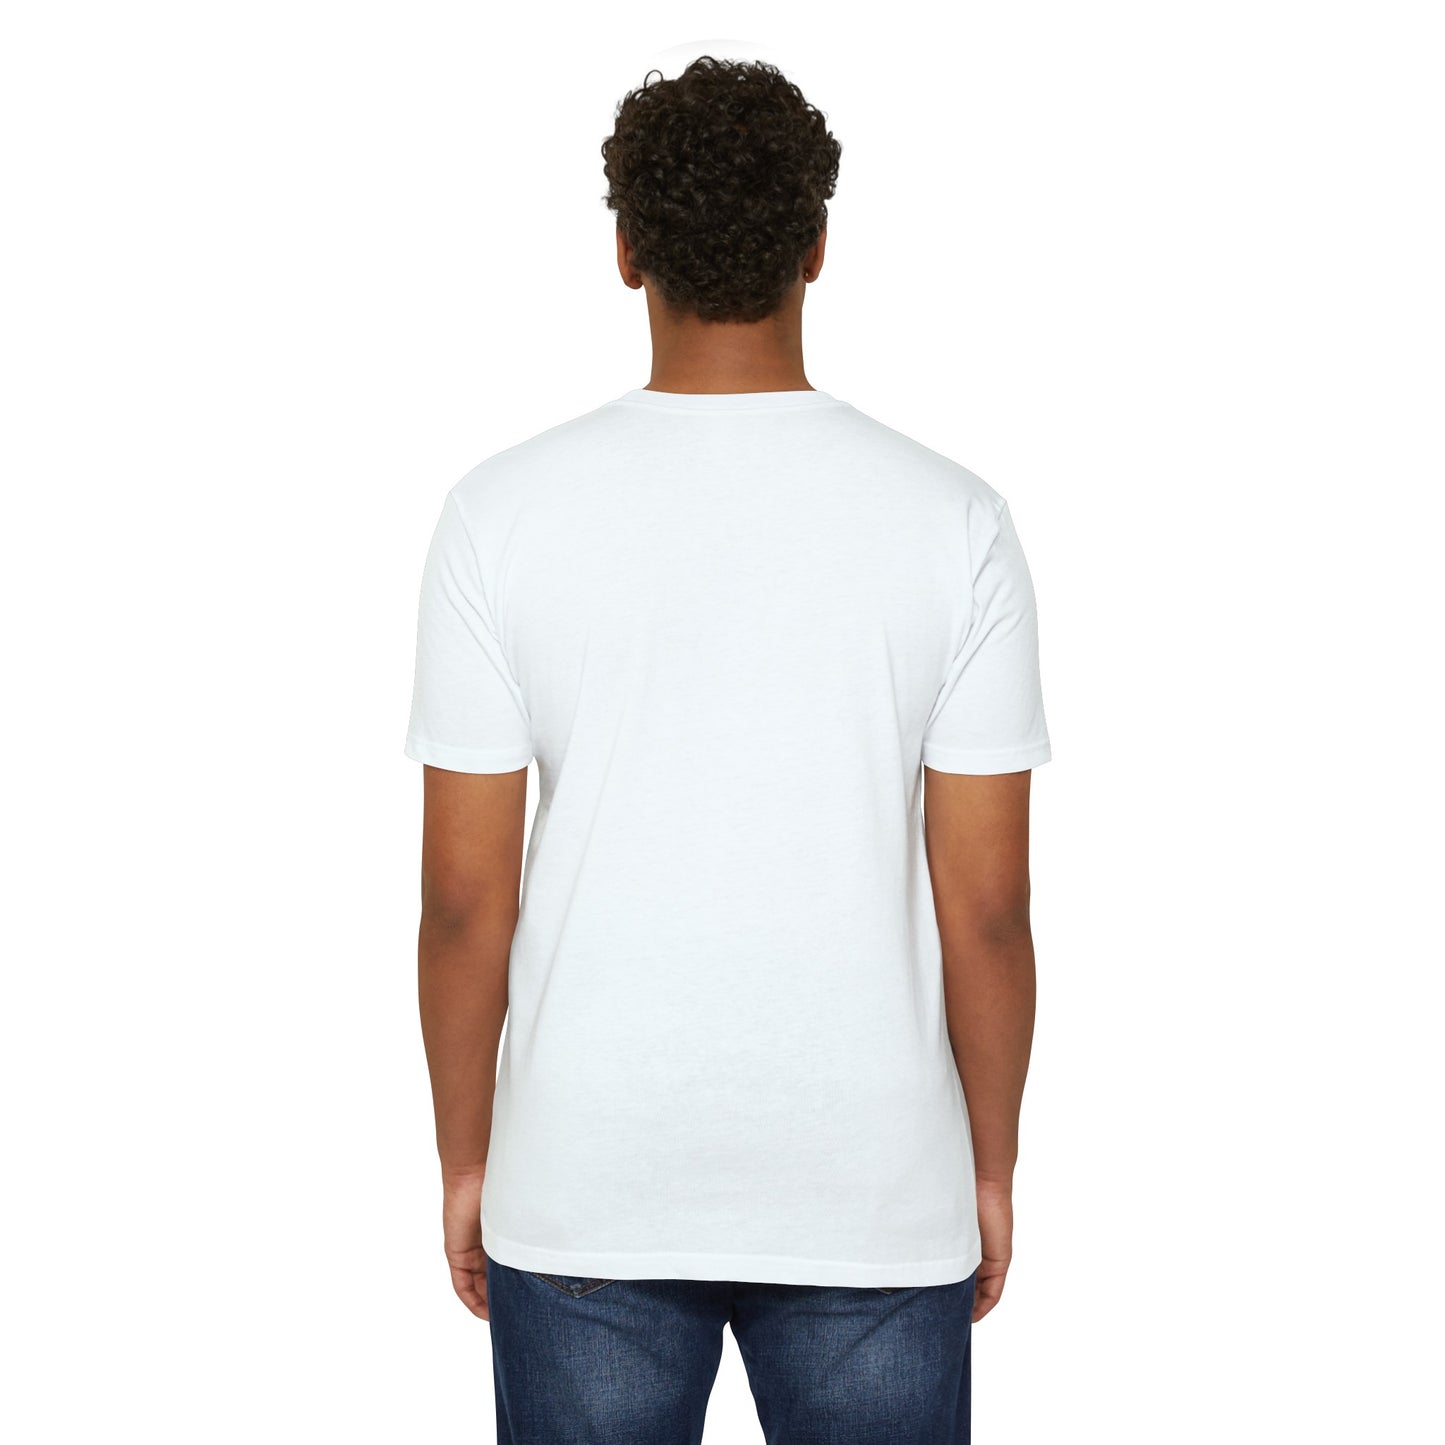 REF LOVE - Unisex Jersey T-shirt